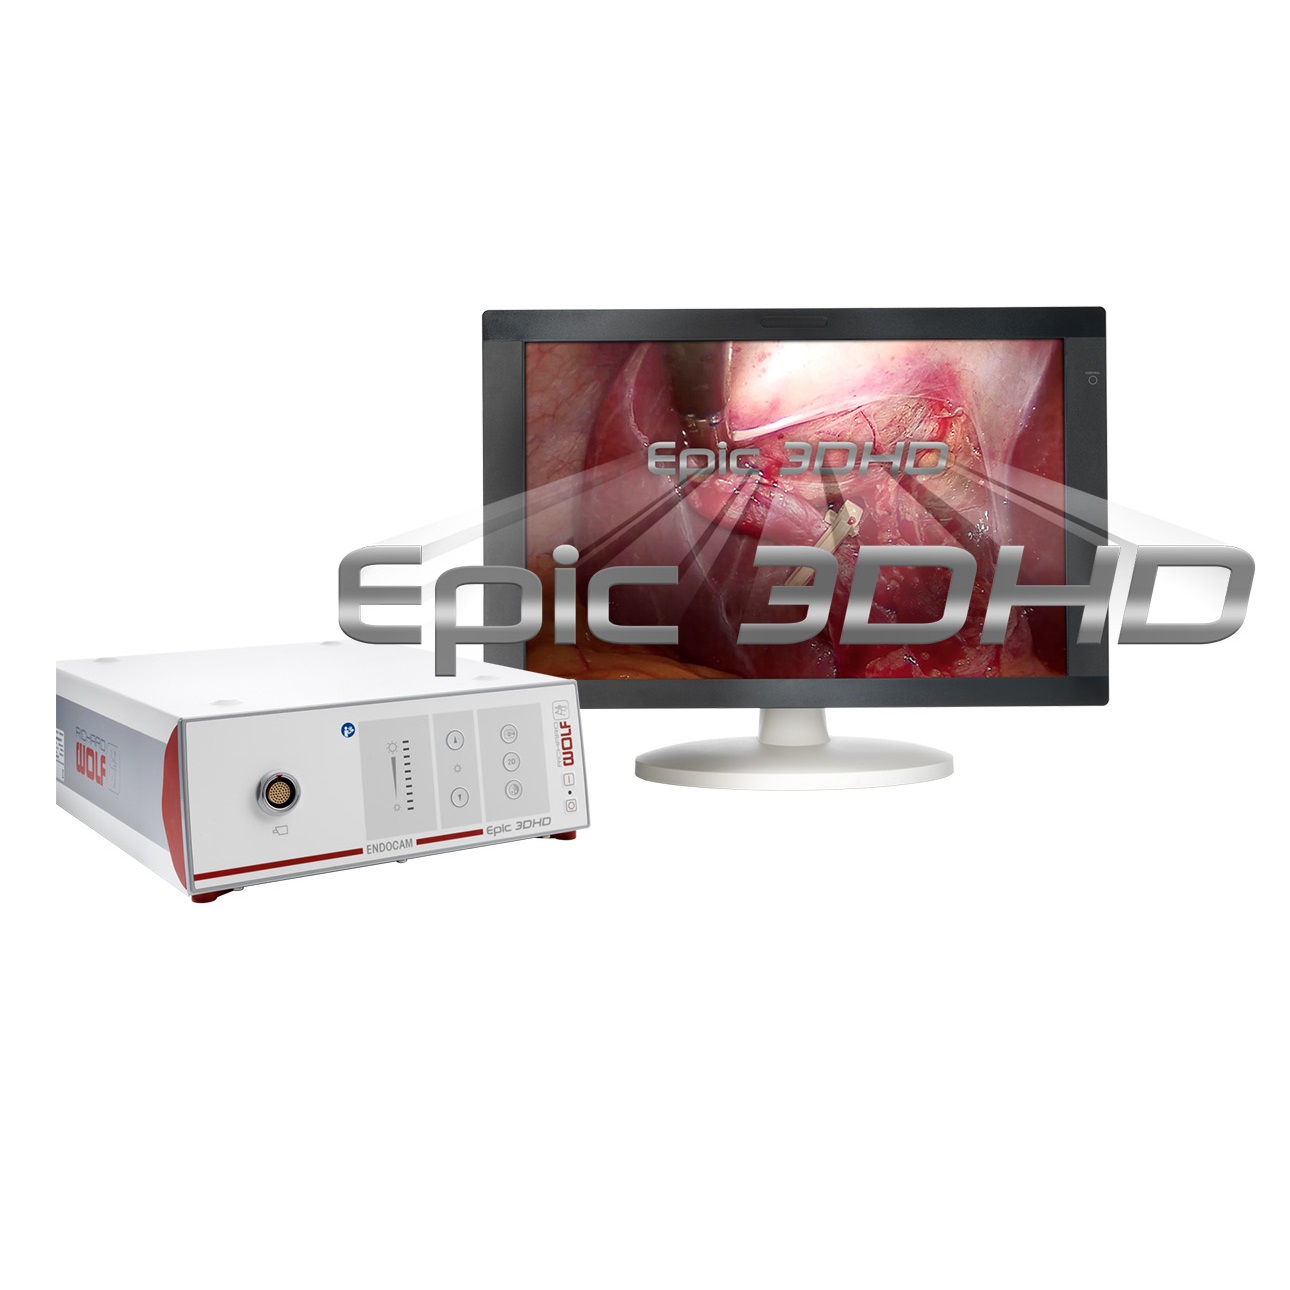 Richard Wolf Endocam Epic 3D HD